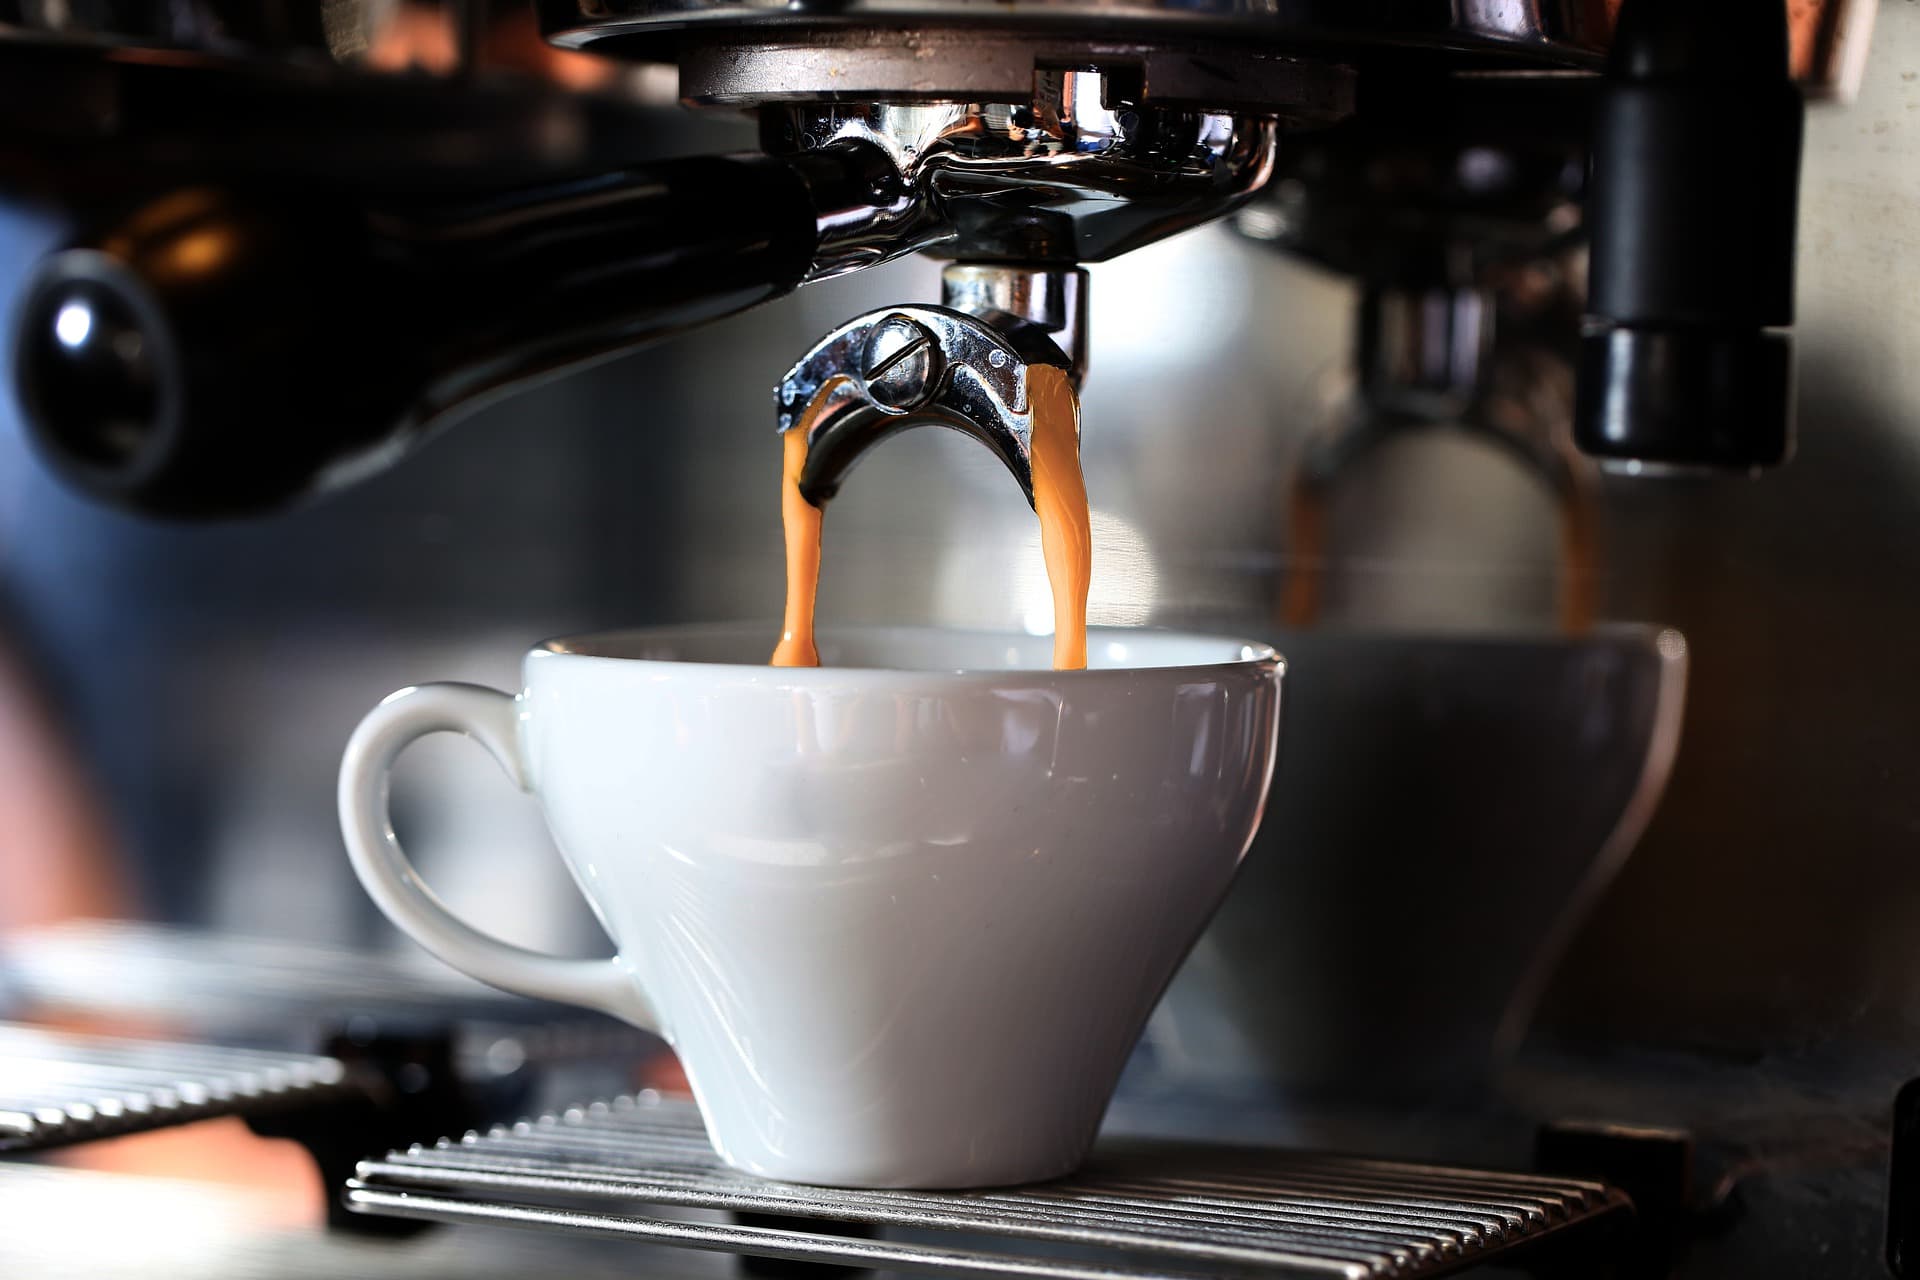 Coffee poured into mug from machine